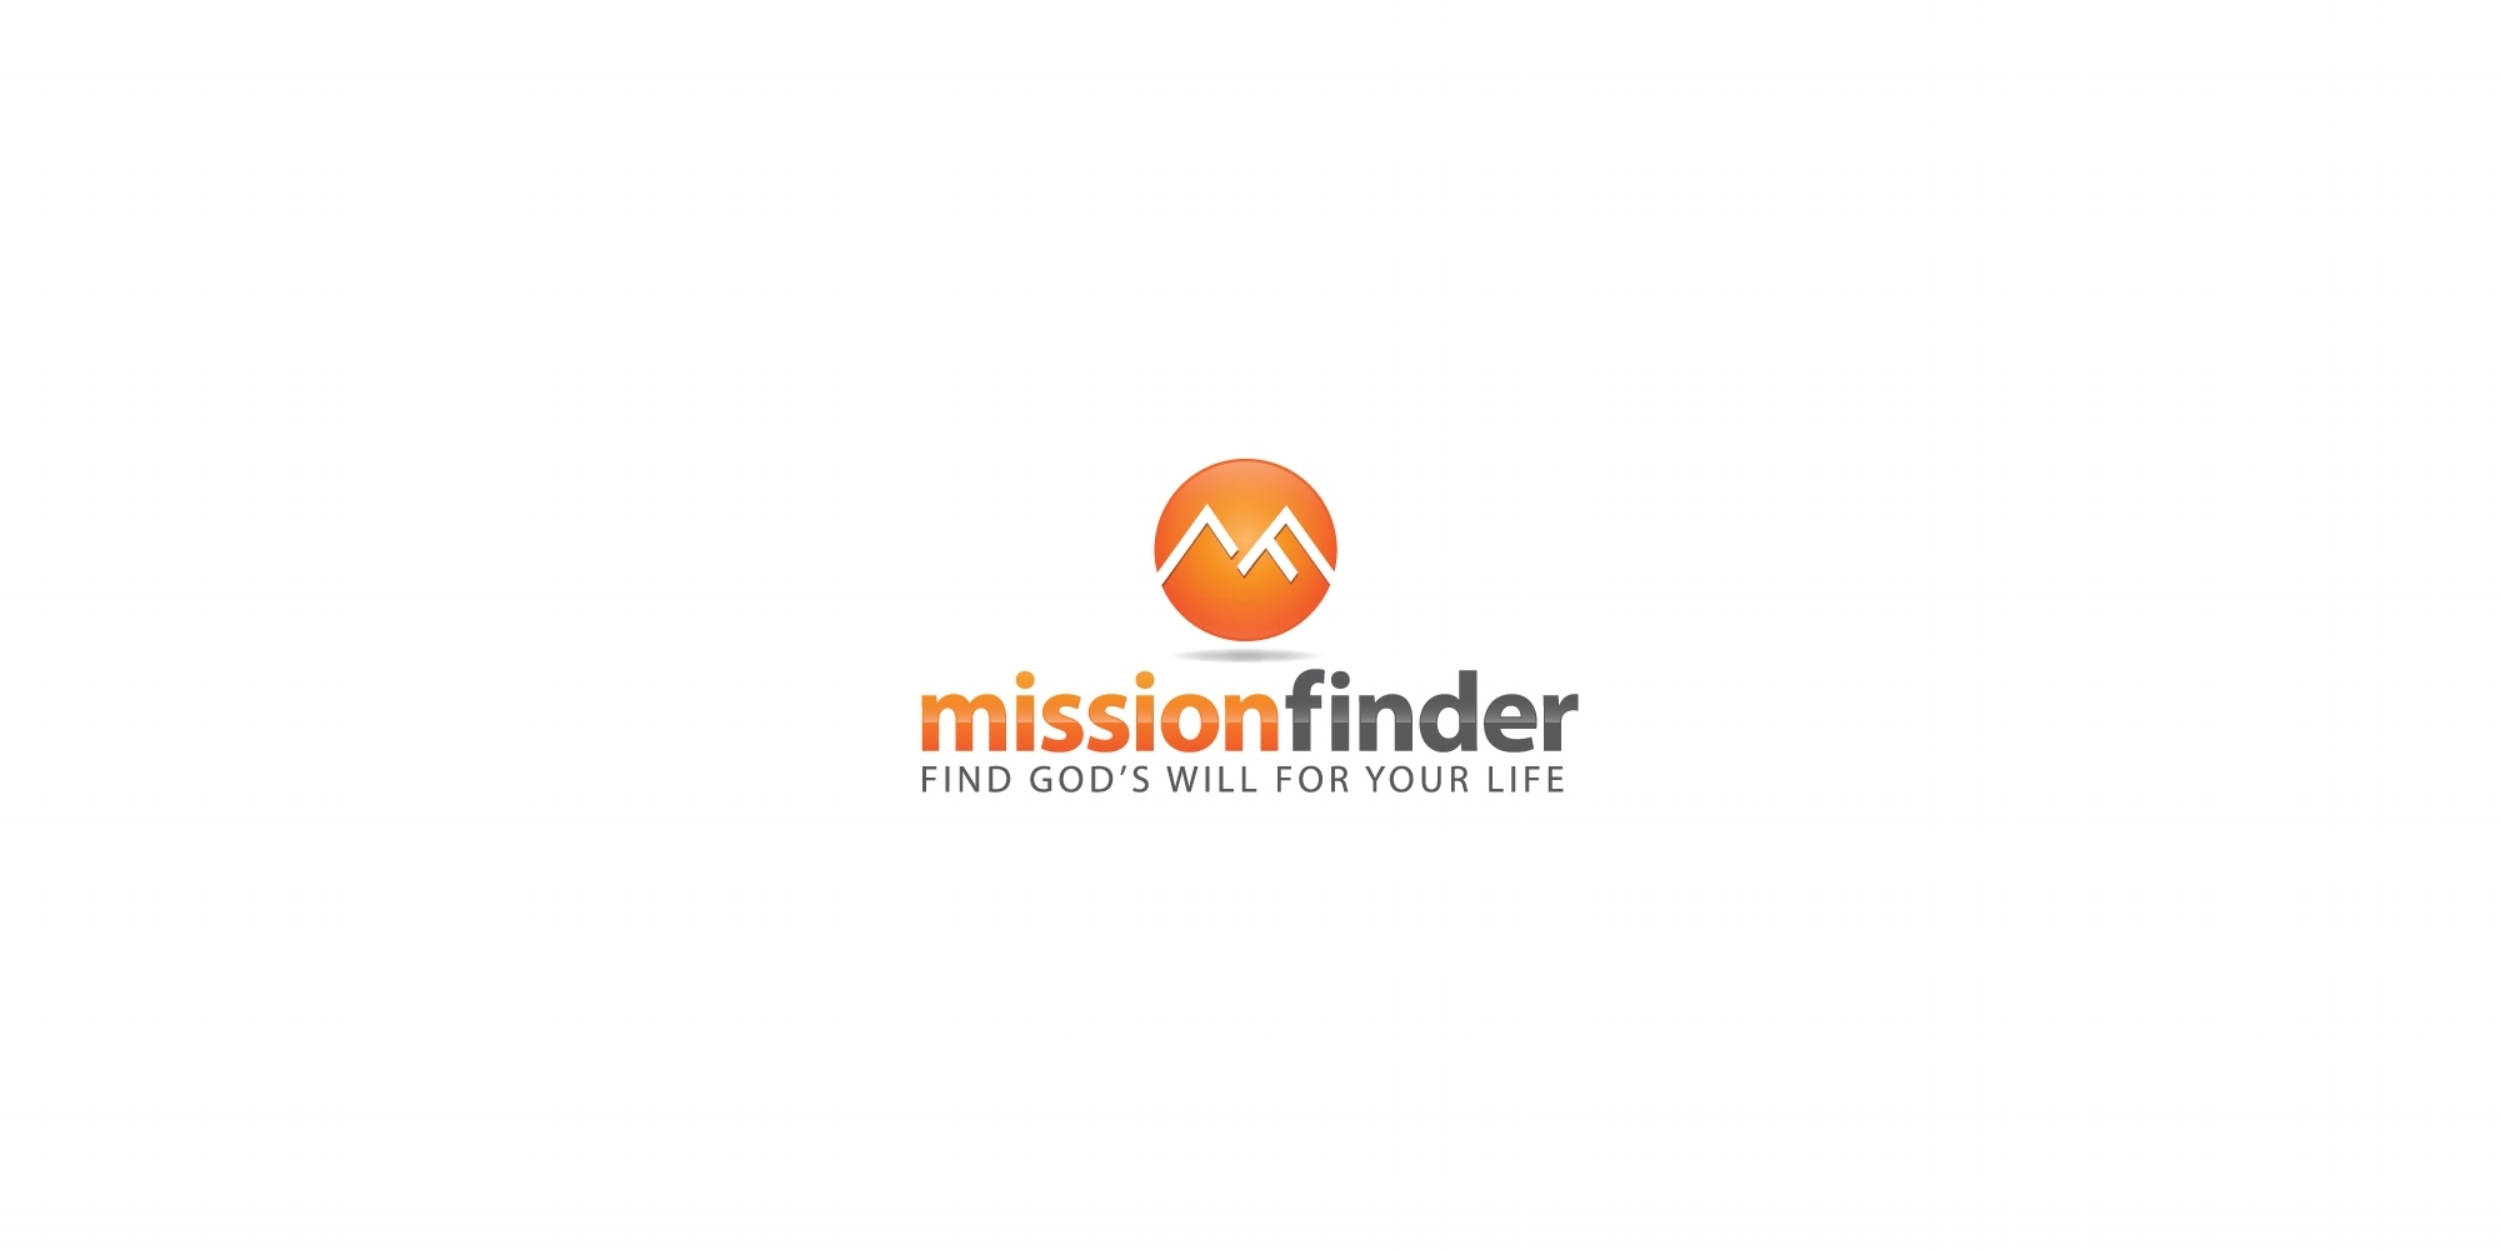  www.missionfinder.org 